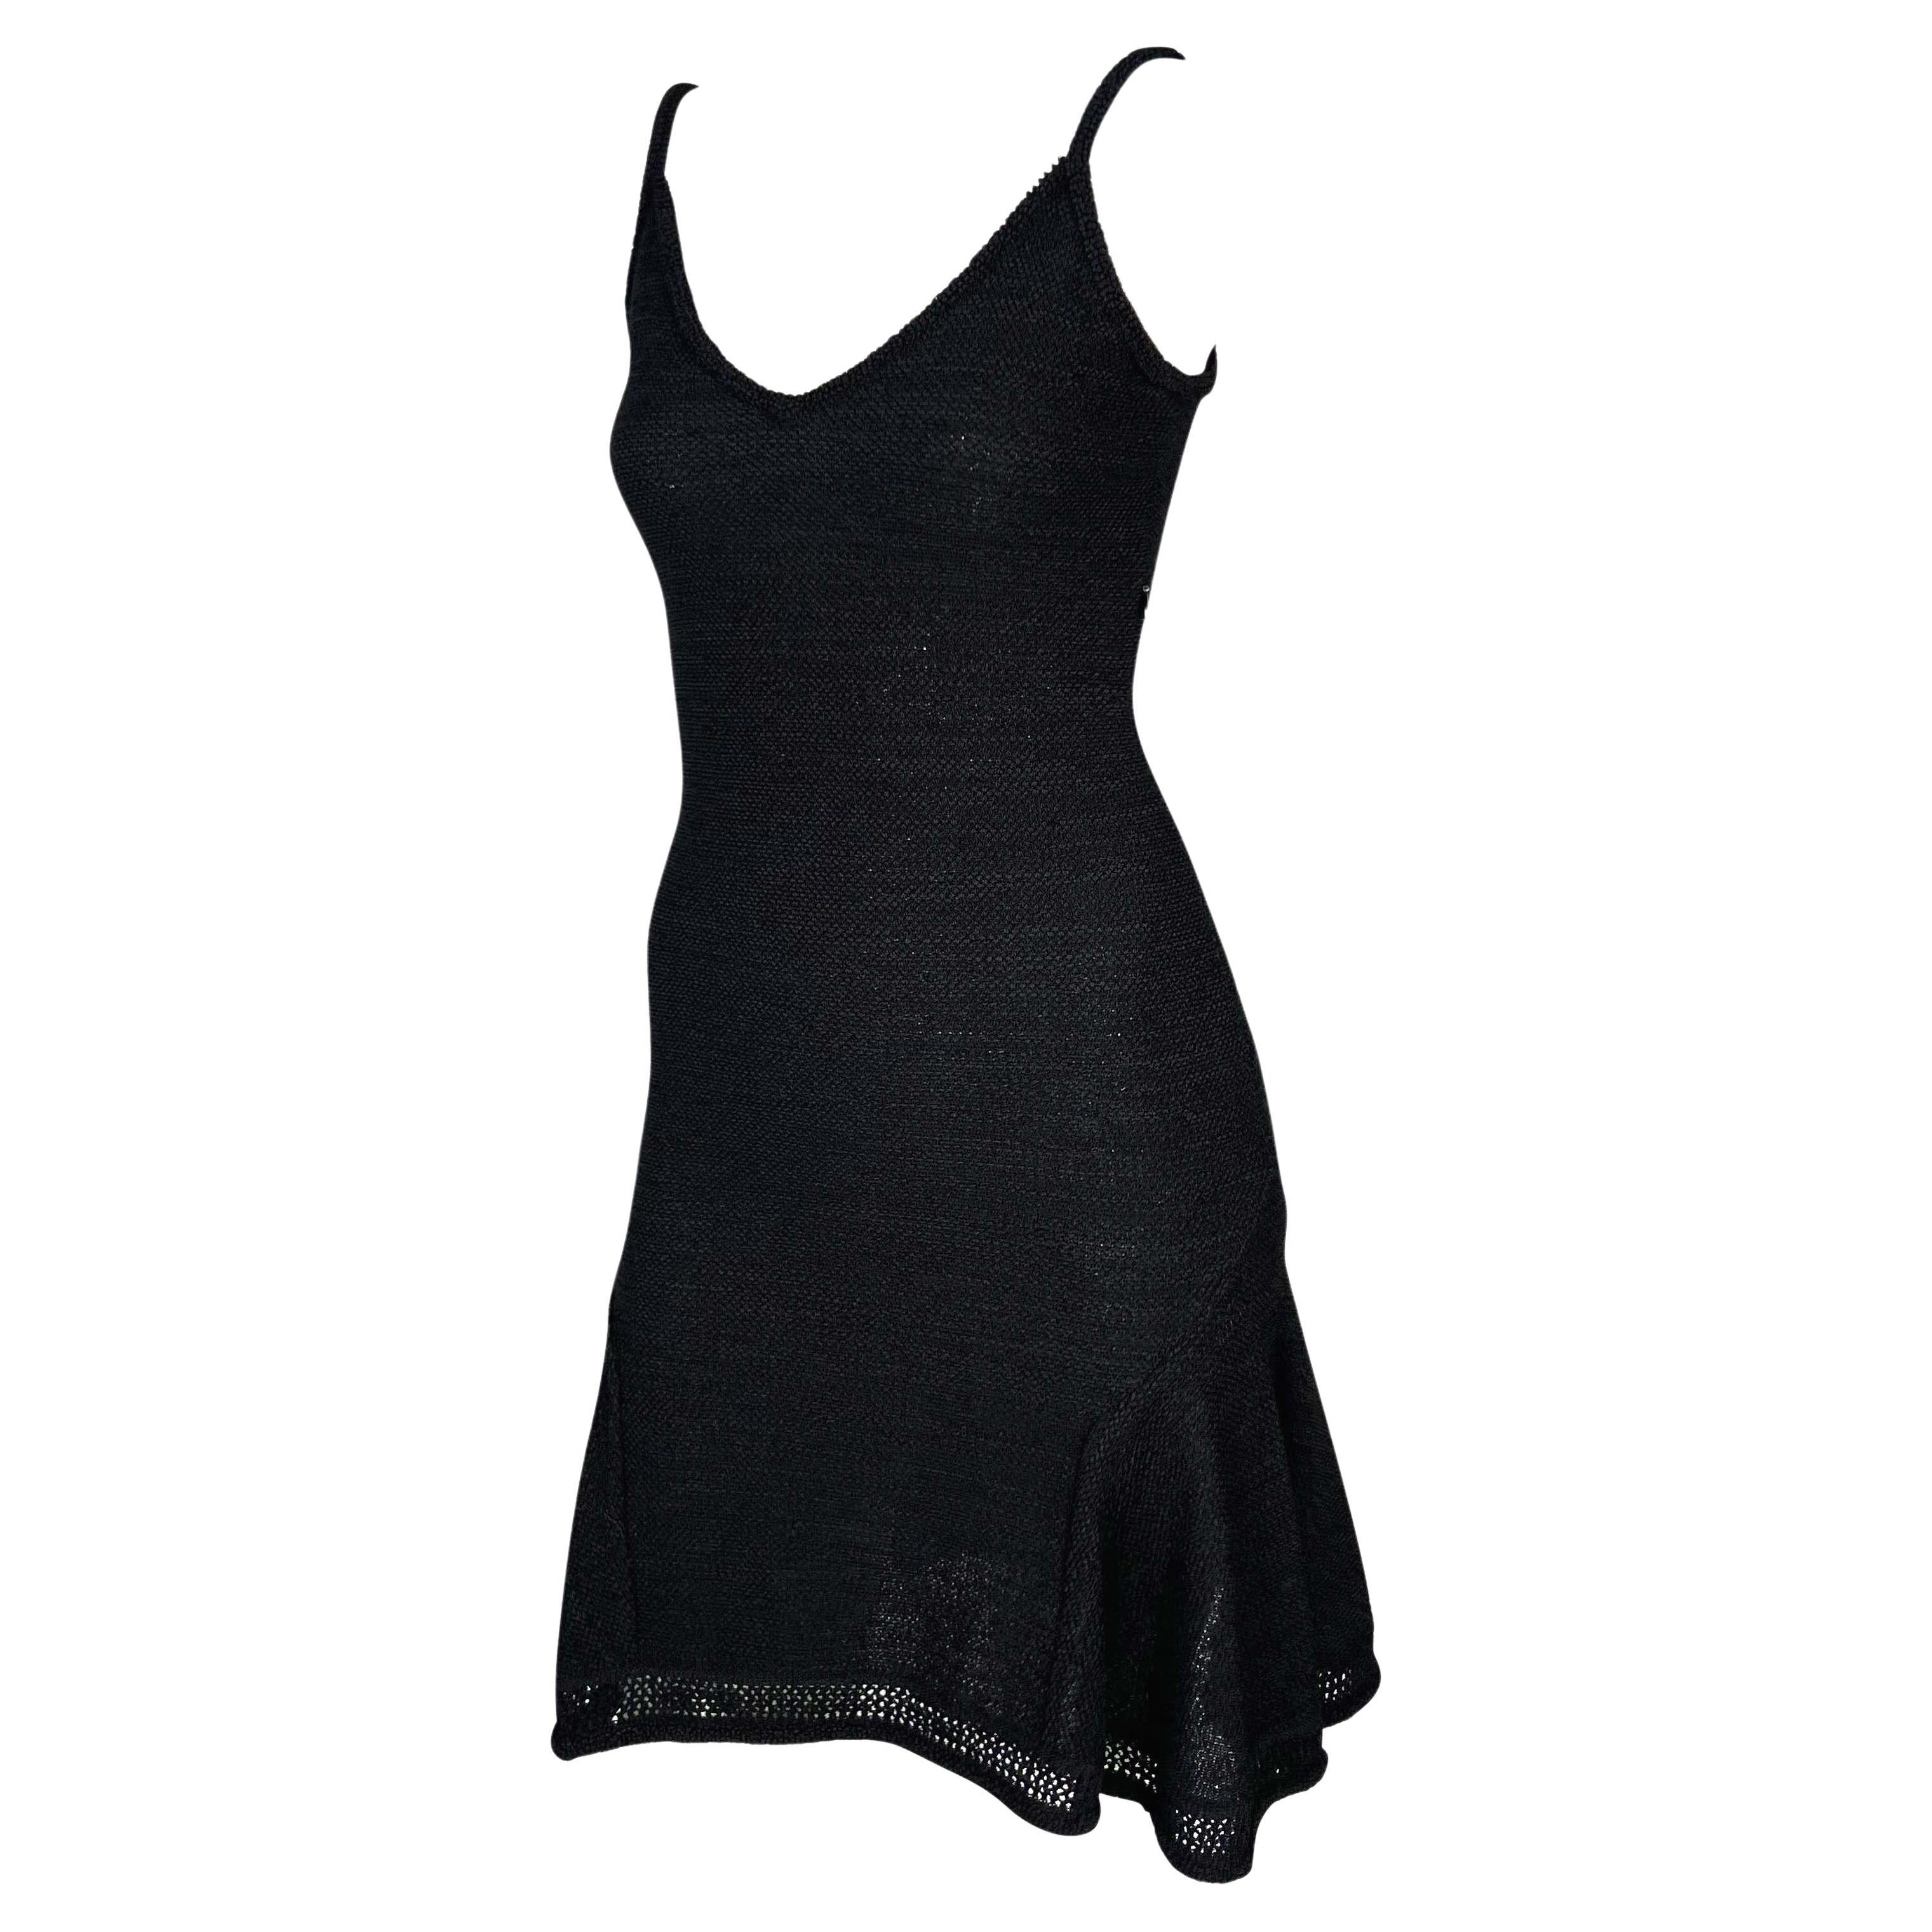 S/S 1999 John Galliano Stretch Knit Sheer Flare Black Sweater Dress